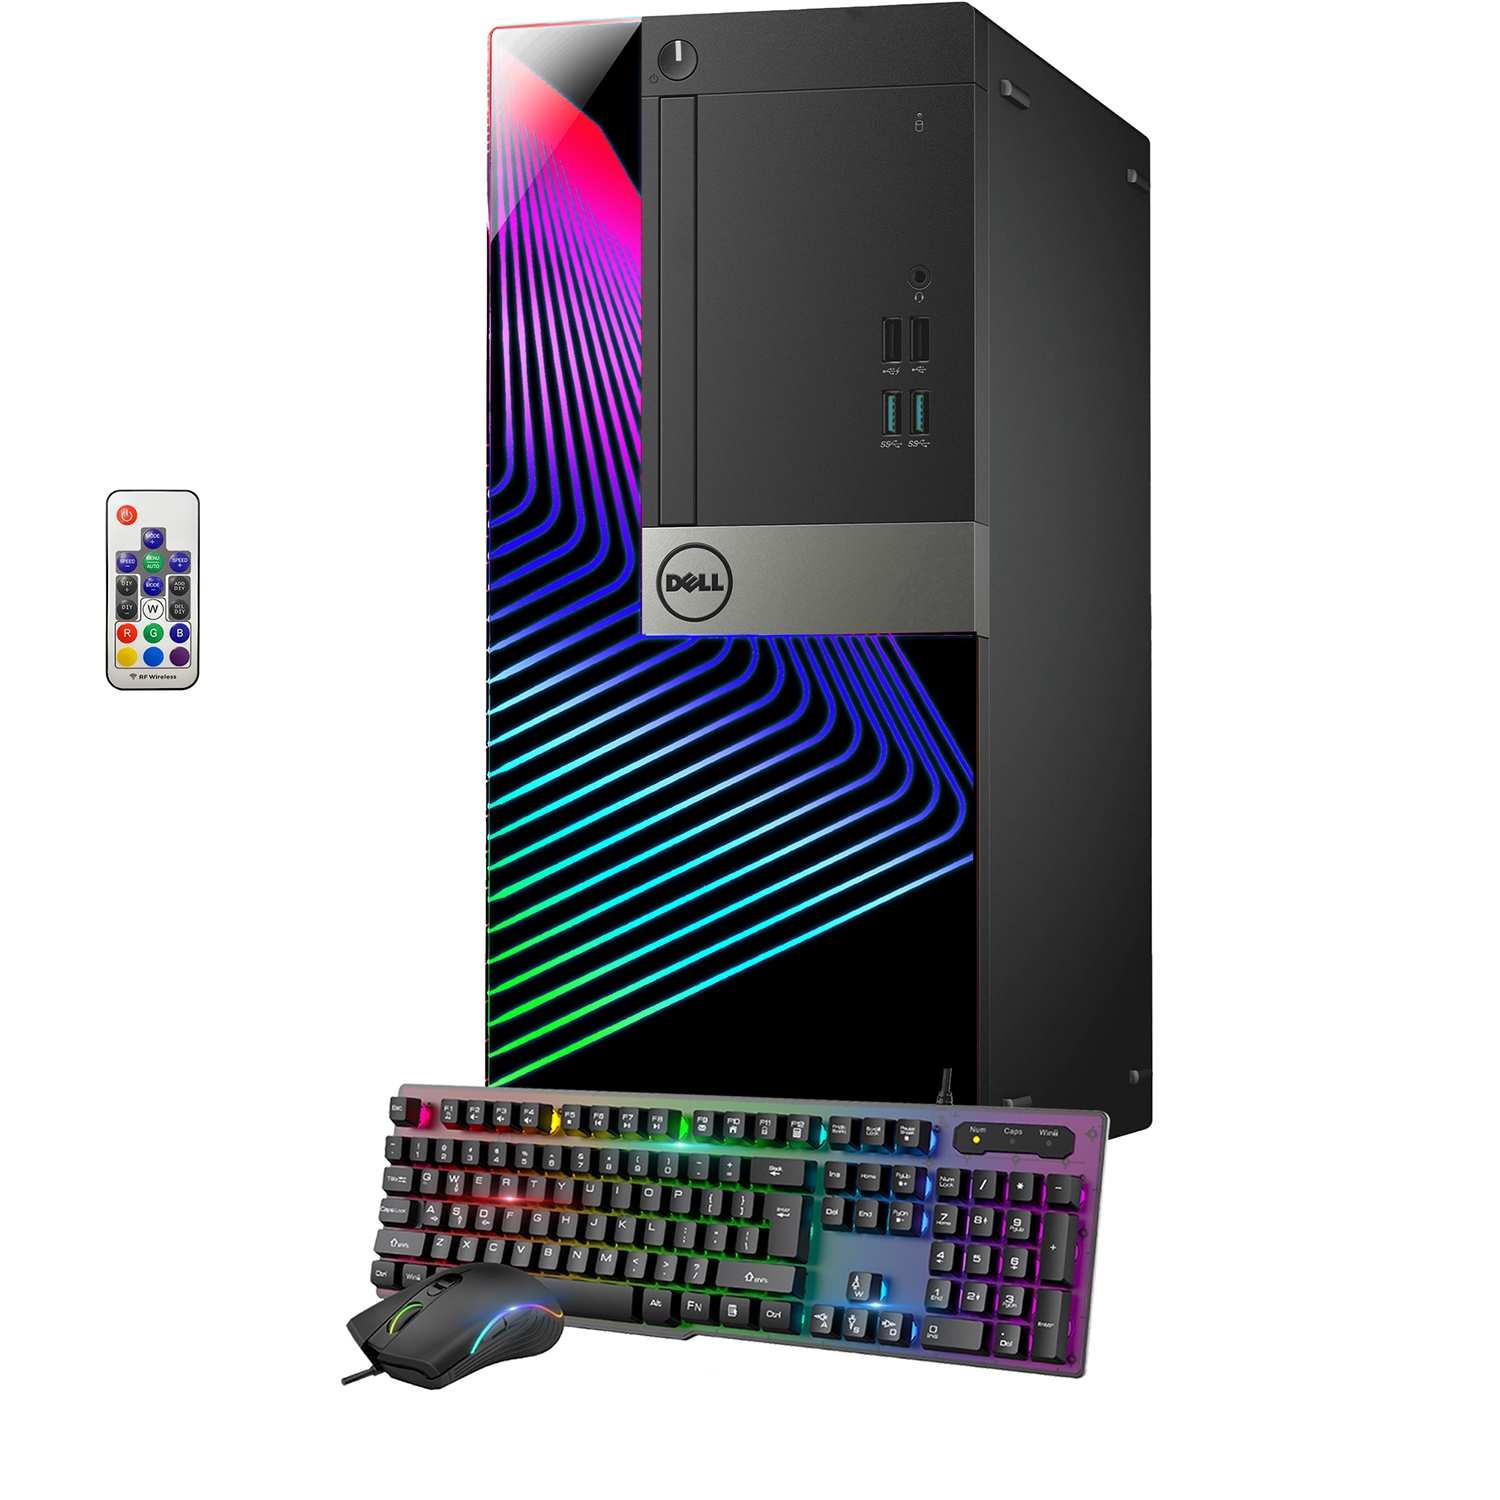 Refurbished (Good) - Dell OptiPlex Tower Desktop Computer with RGB Lights i7 6700 3.4 GHz 16GB RAM 512GB SSD Win 10 Pro WIFI, HAJAAN Keyboard & Mouse HDMI